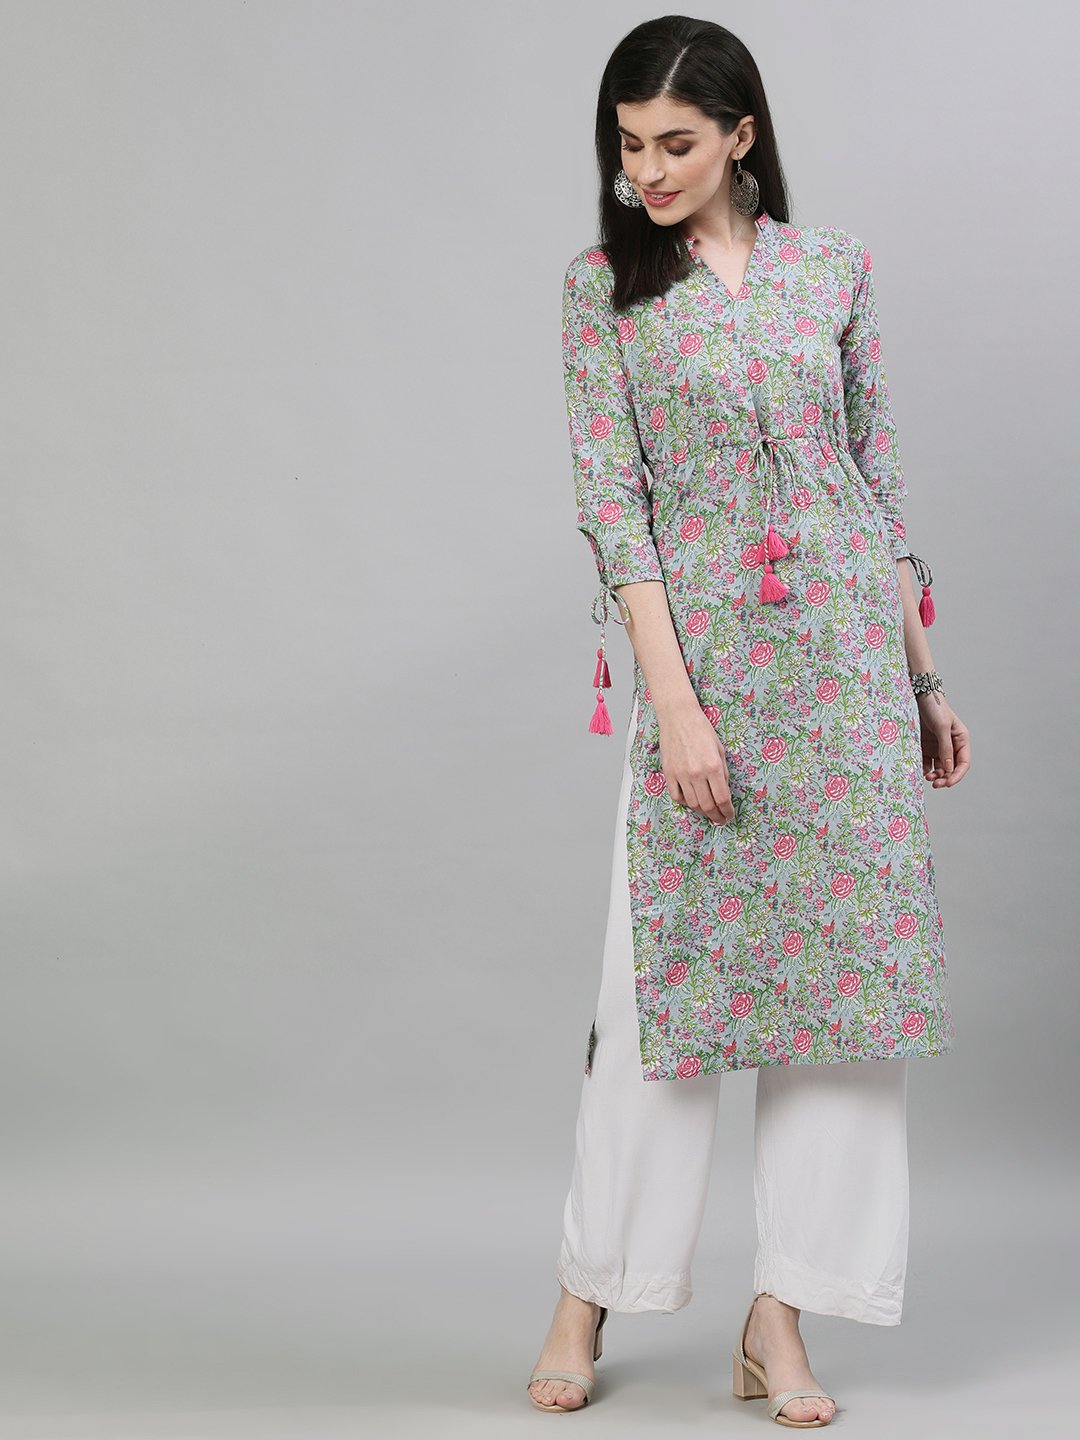 Women's Light Grey Calf Length Three-Quarter Sleeves A-Line Floral Printed Cotton Kurta - Nayo Clothing